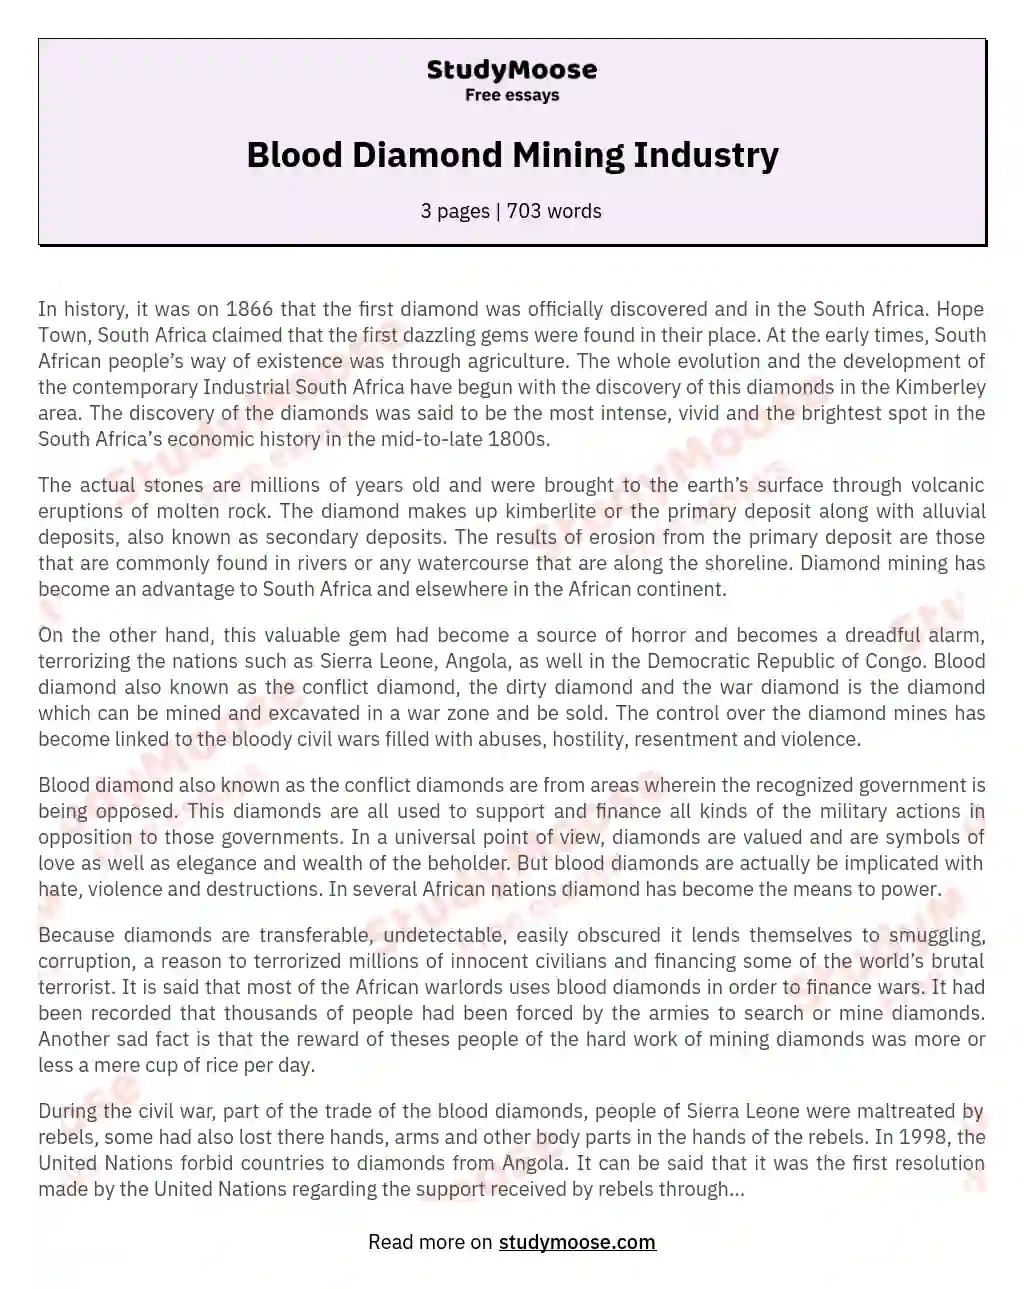 Blood Diamond Mining Industry essay